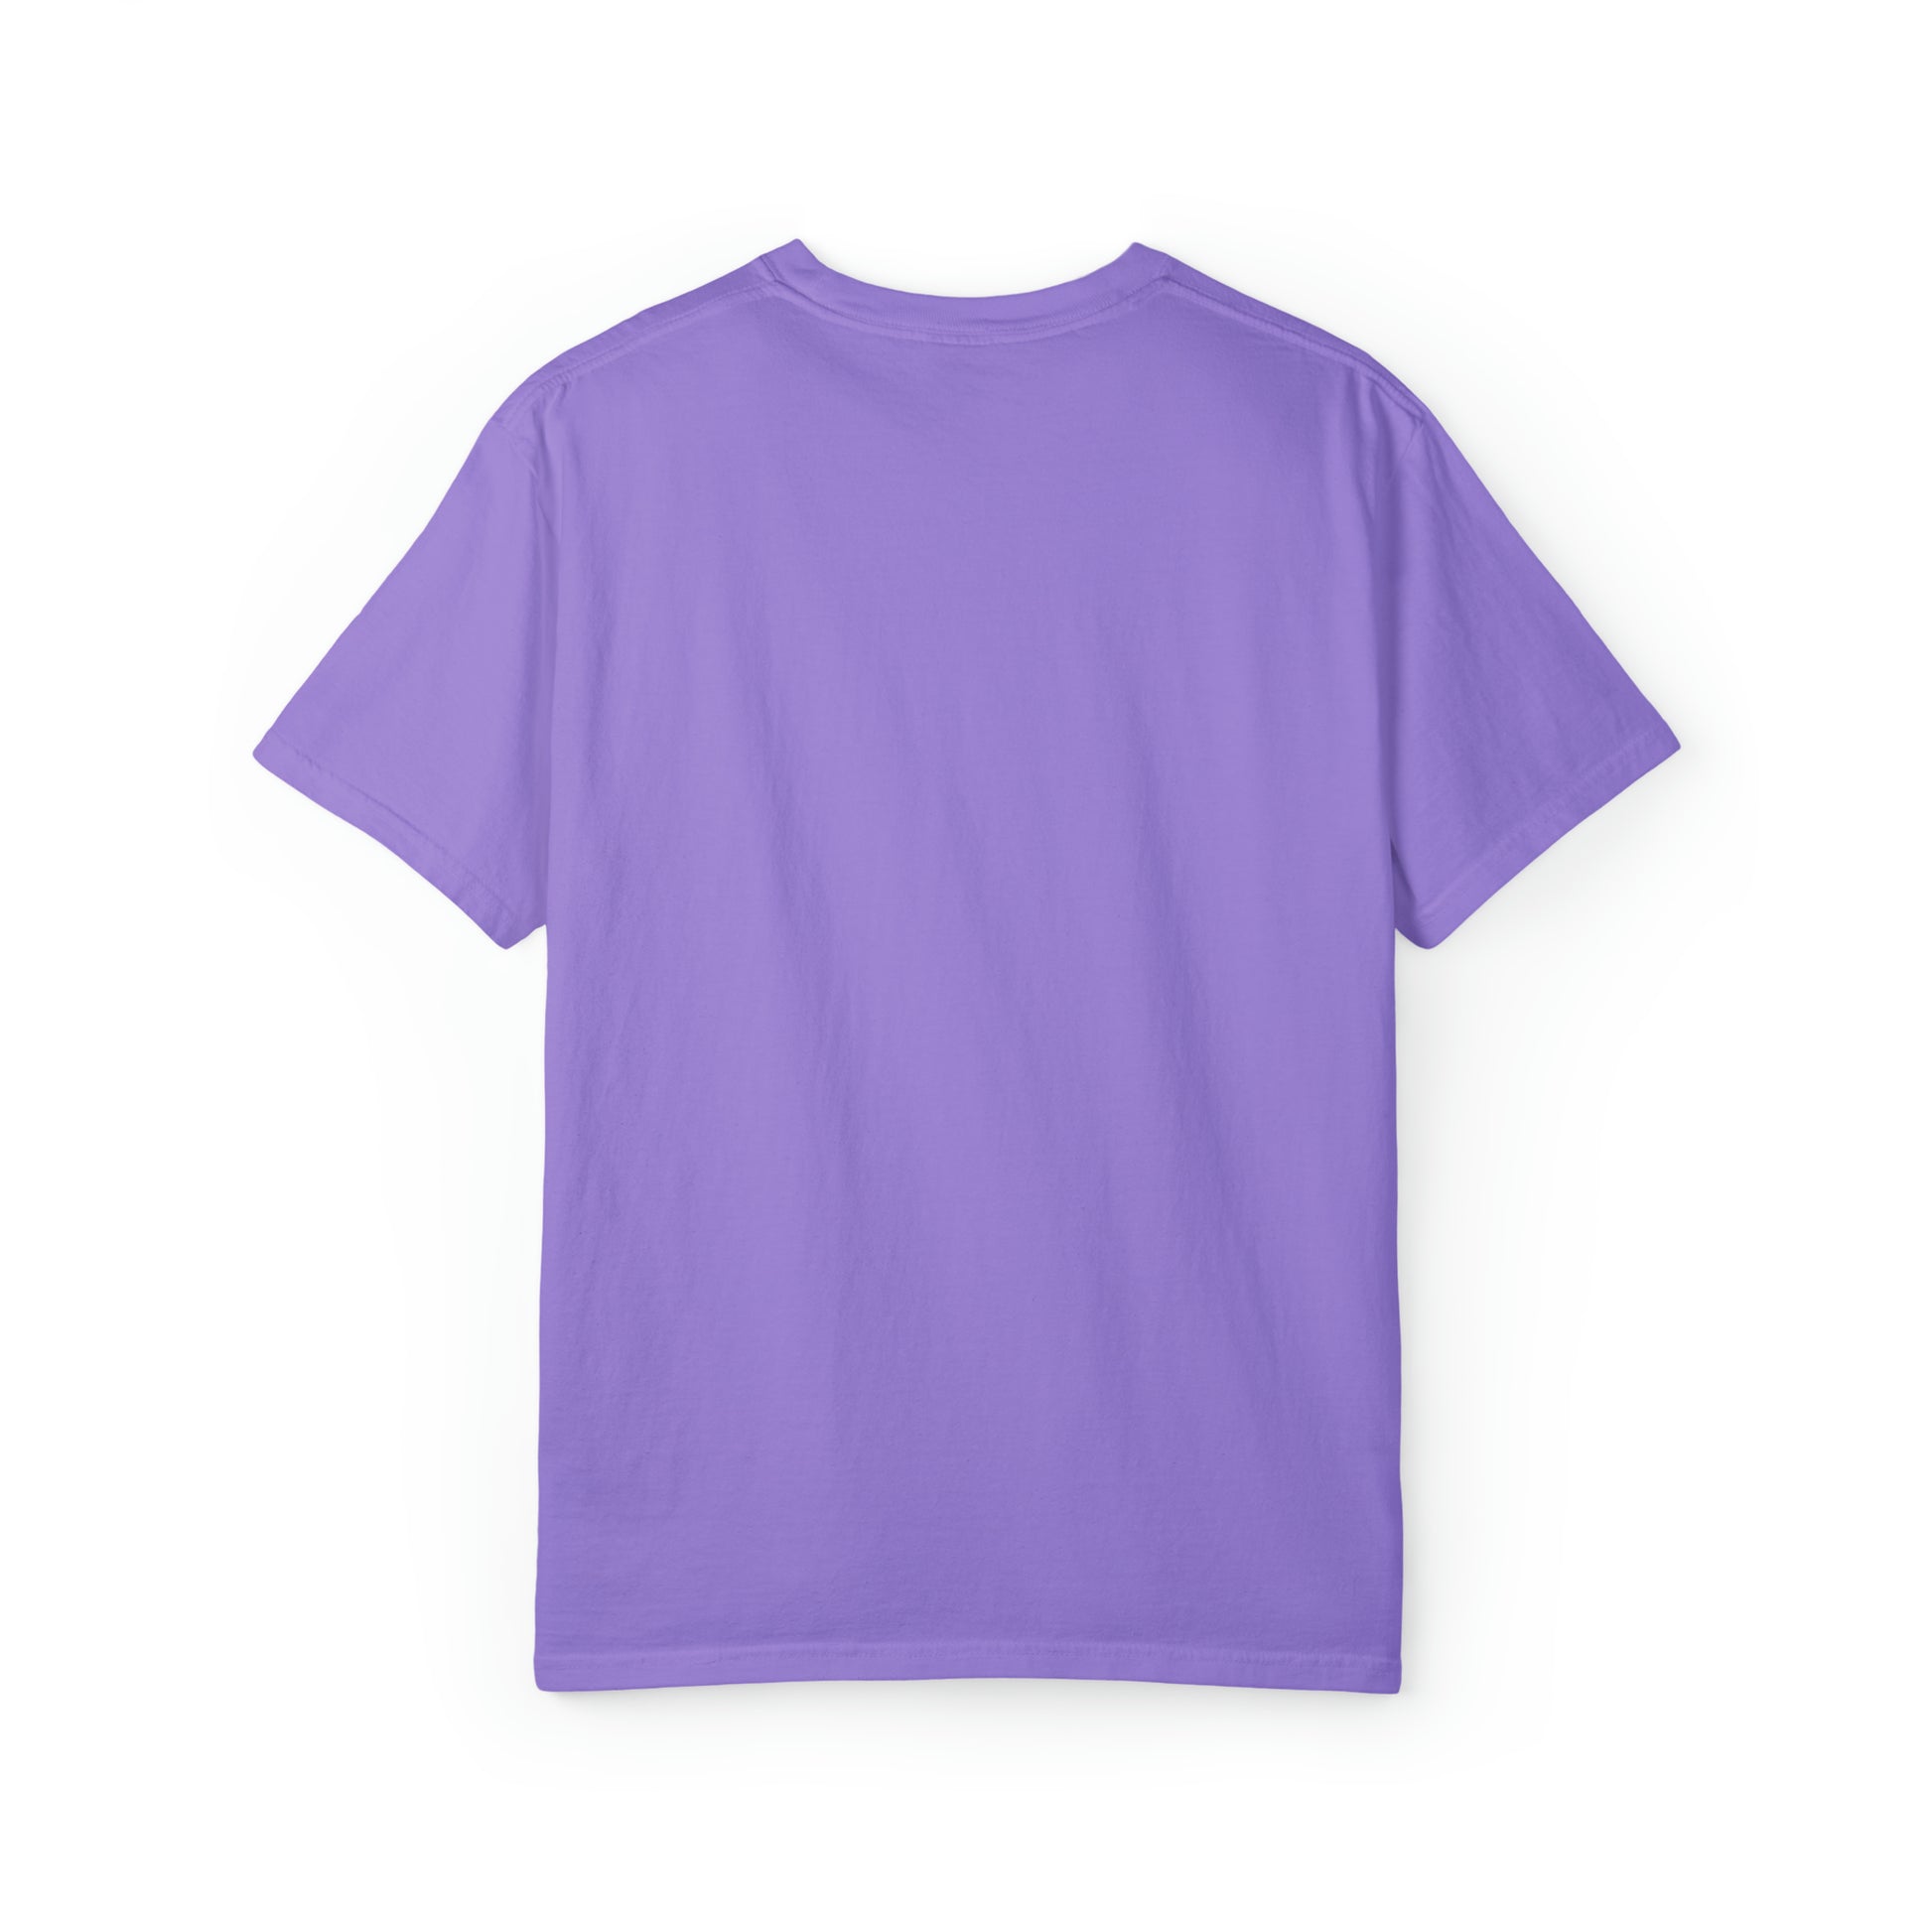 Comfort Colors - T-shirts Periwinkle / Medium